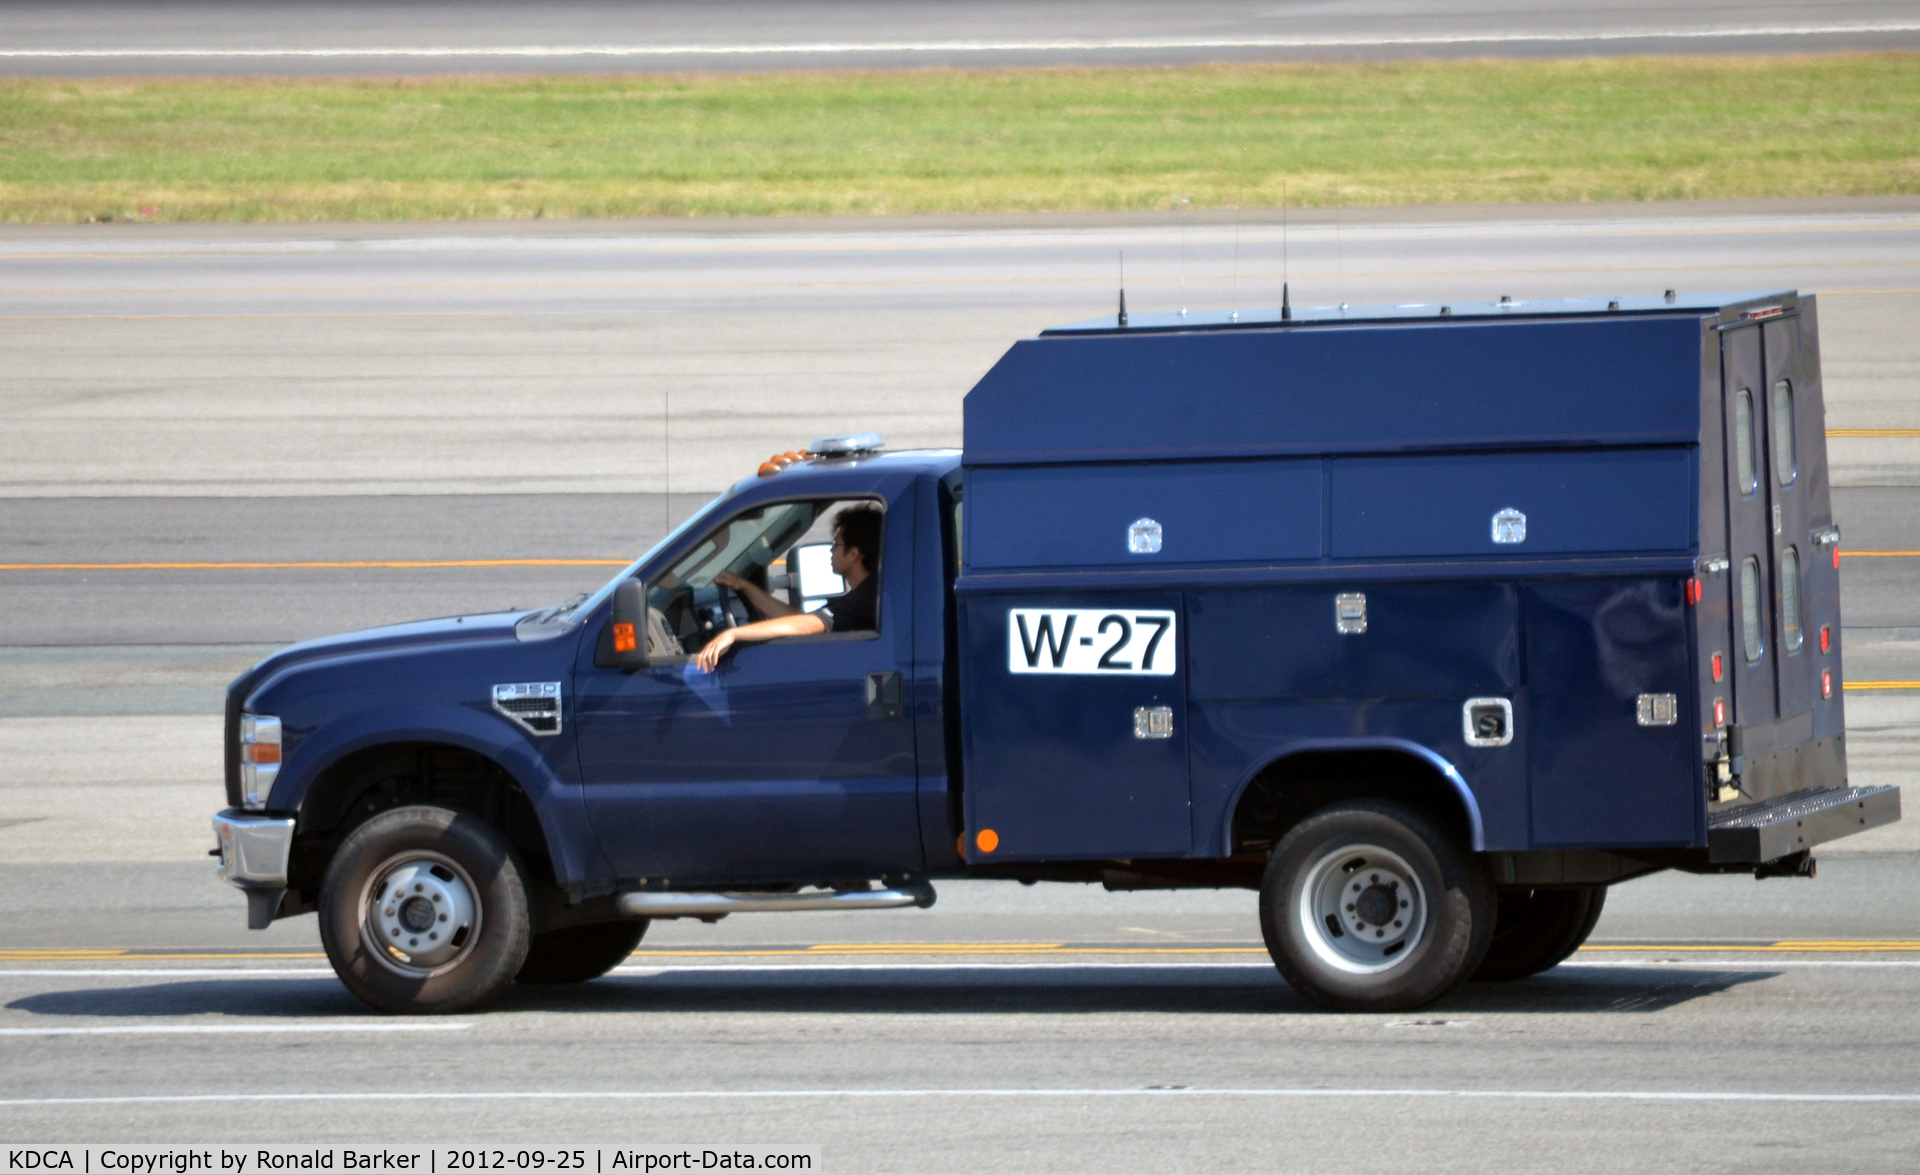 Ronald Reagan Washington National Airport (DCA) - Truck W 27